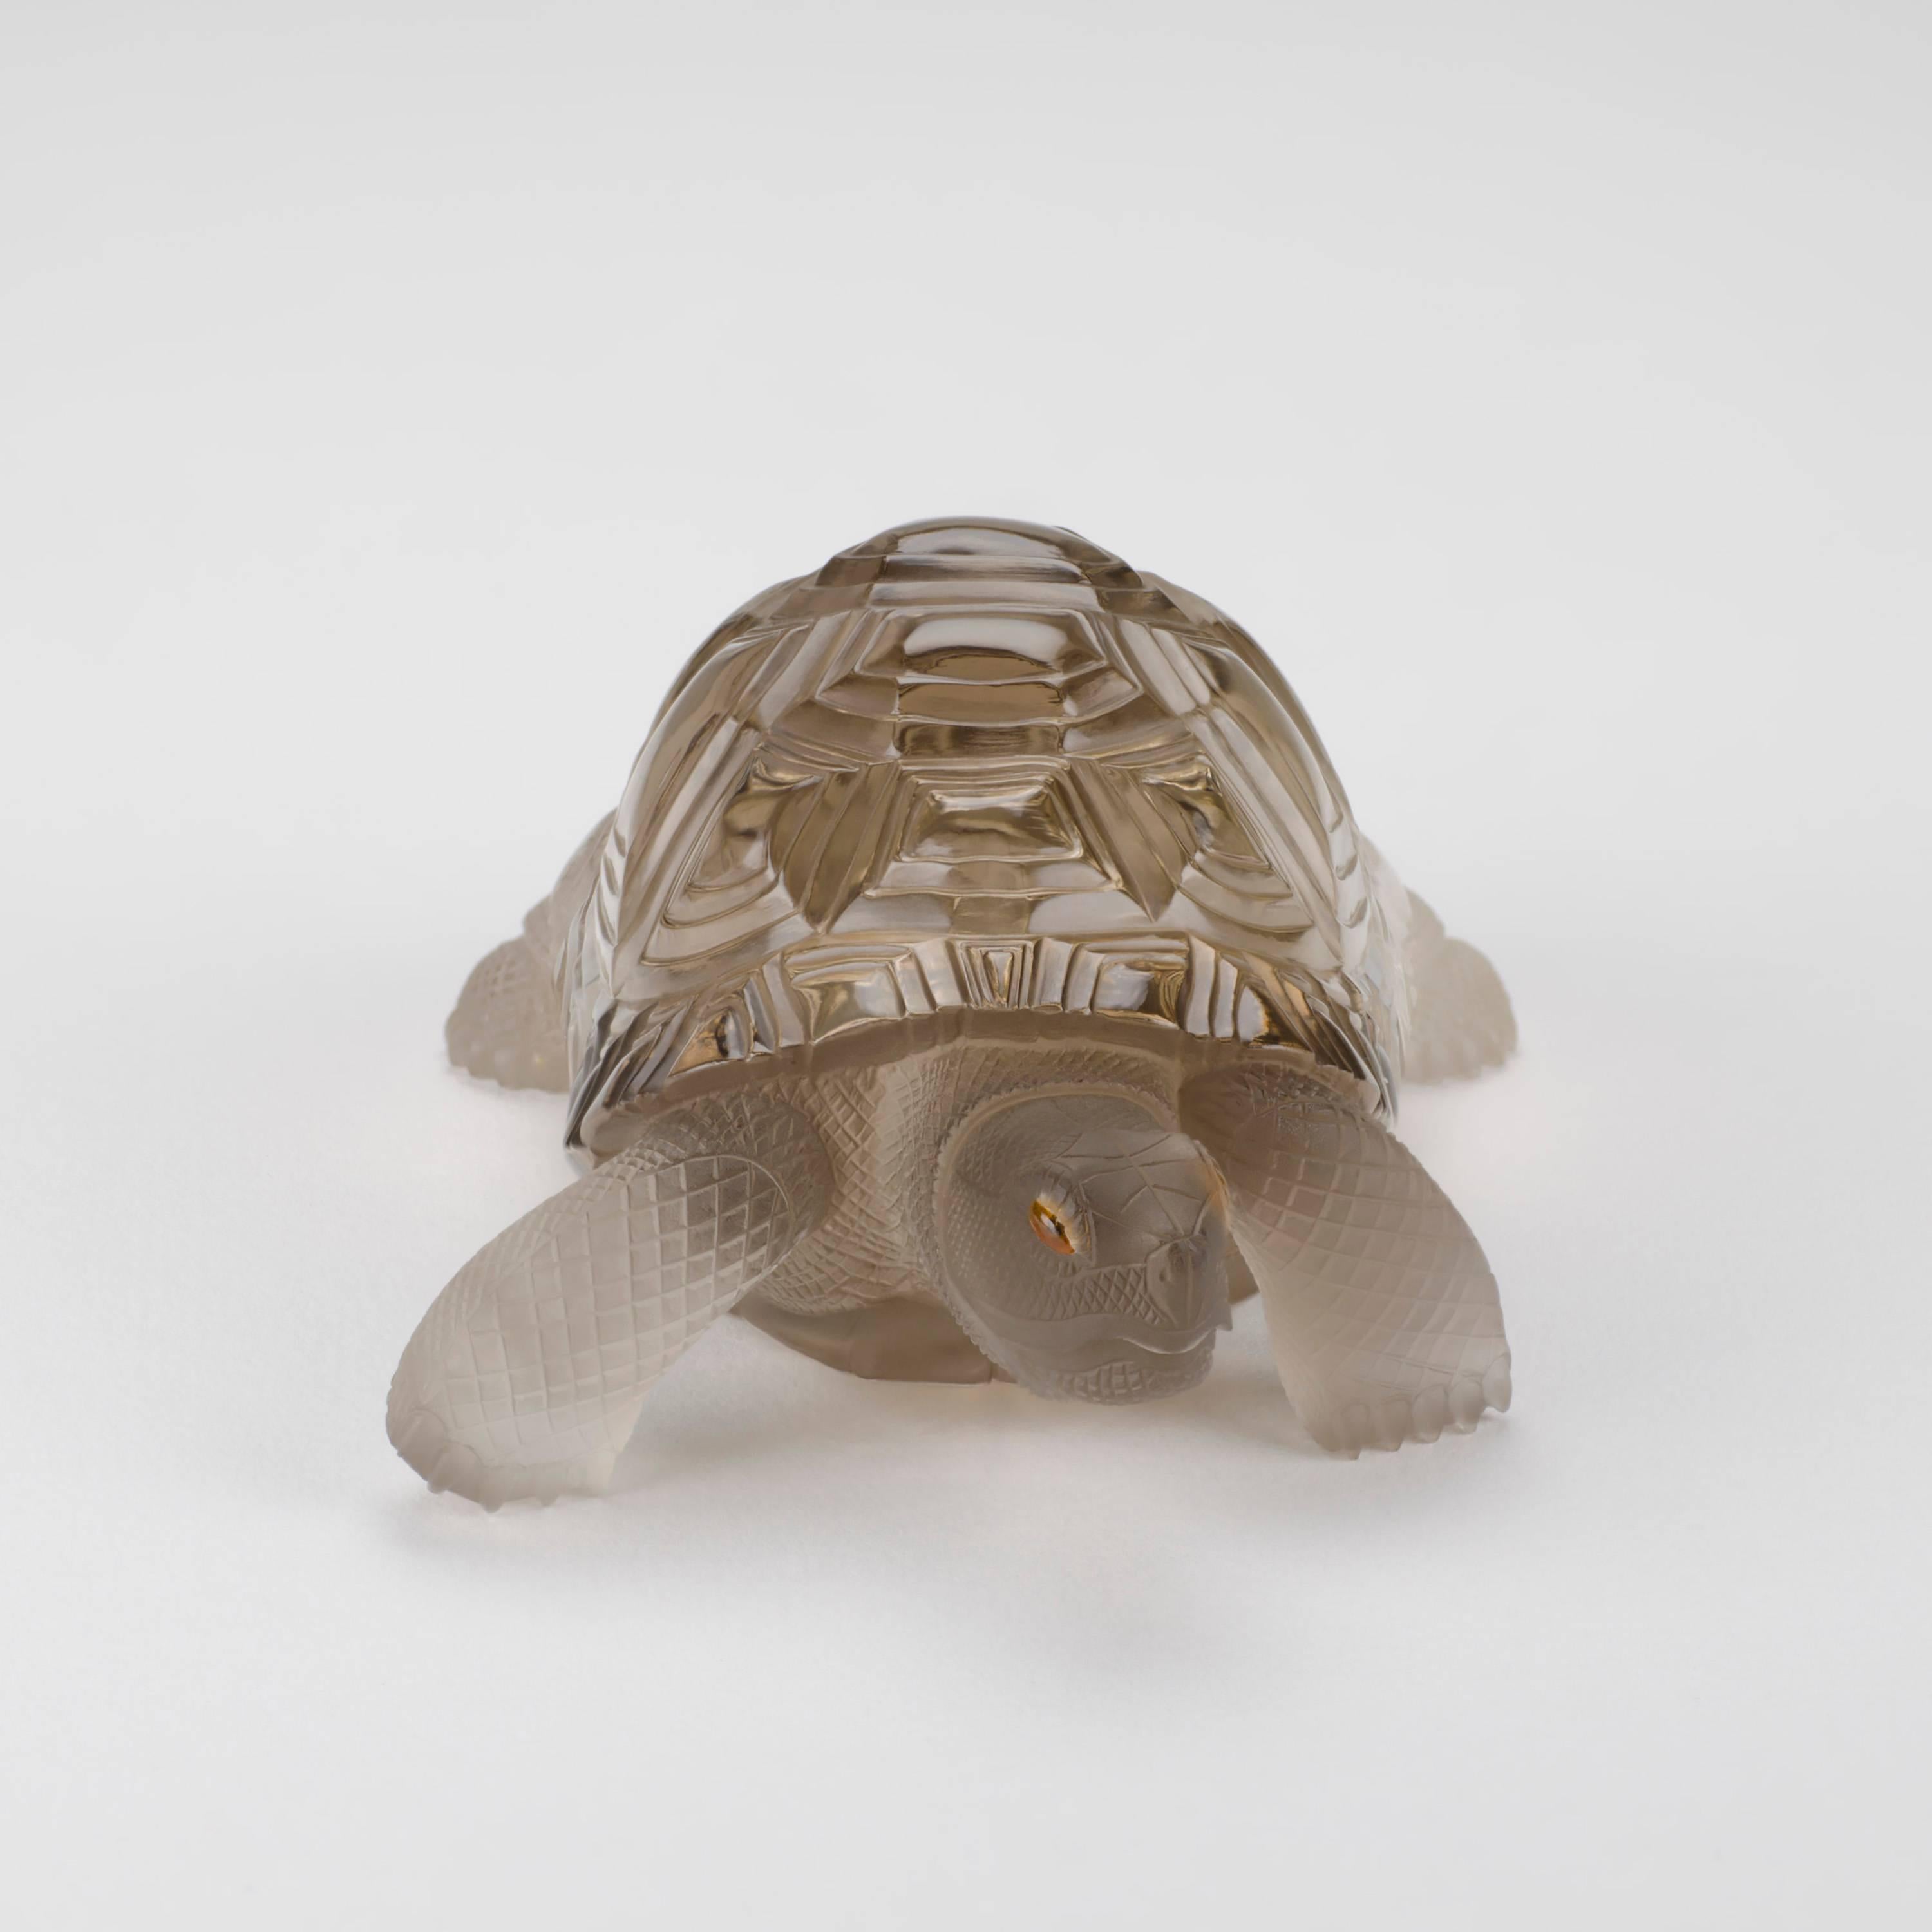 Detailed Smokey Quartz Turtle Sculpture For Sale 1